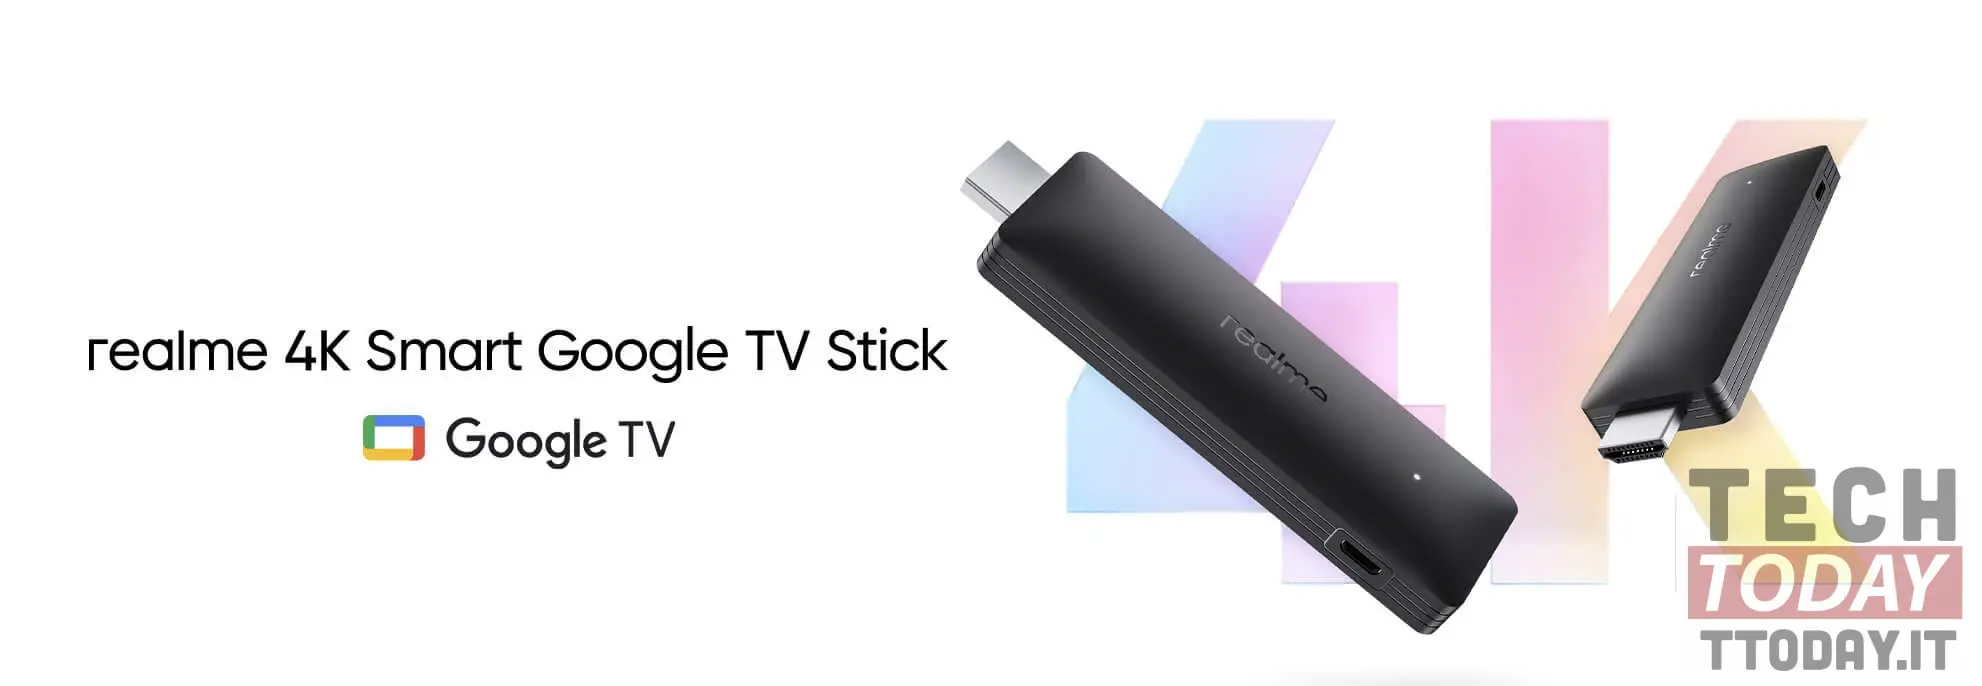 realme tv Stick 4k 将成为谷歌 chromecast 的替代品